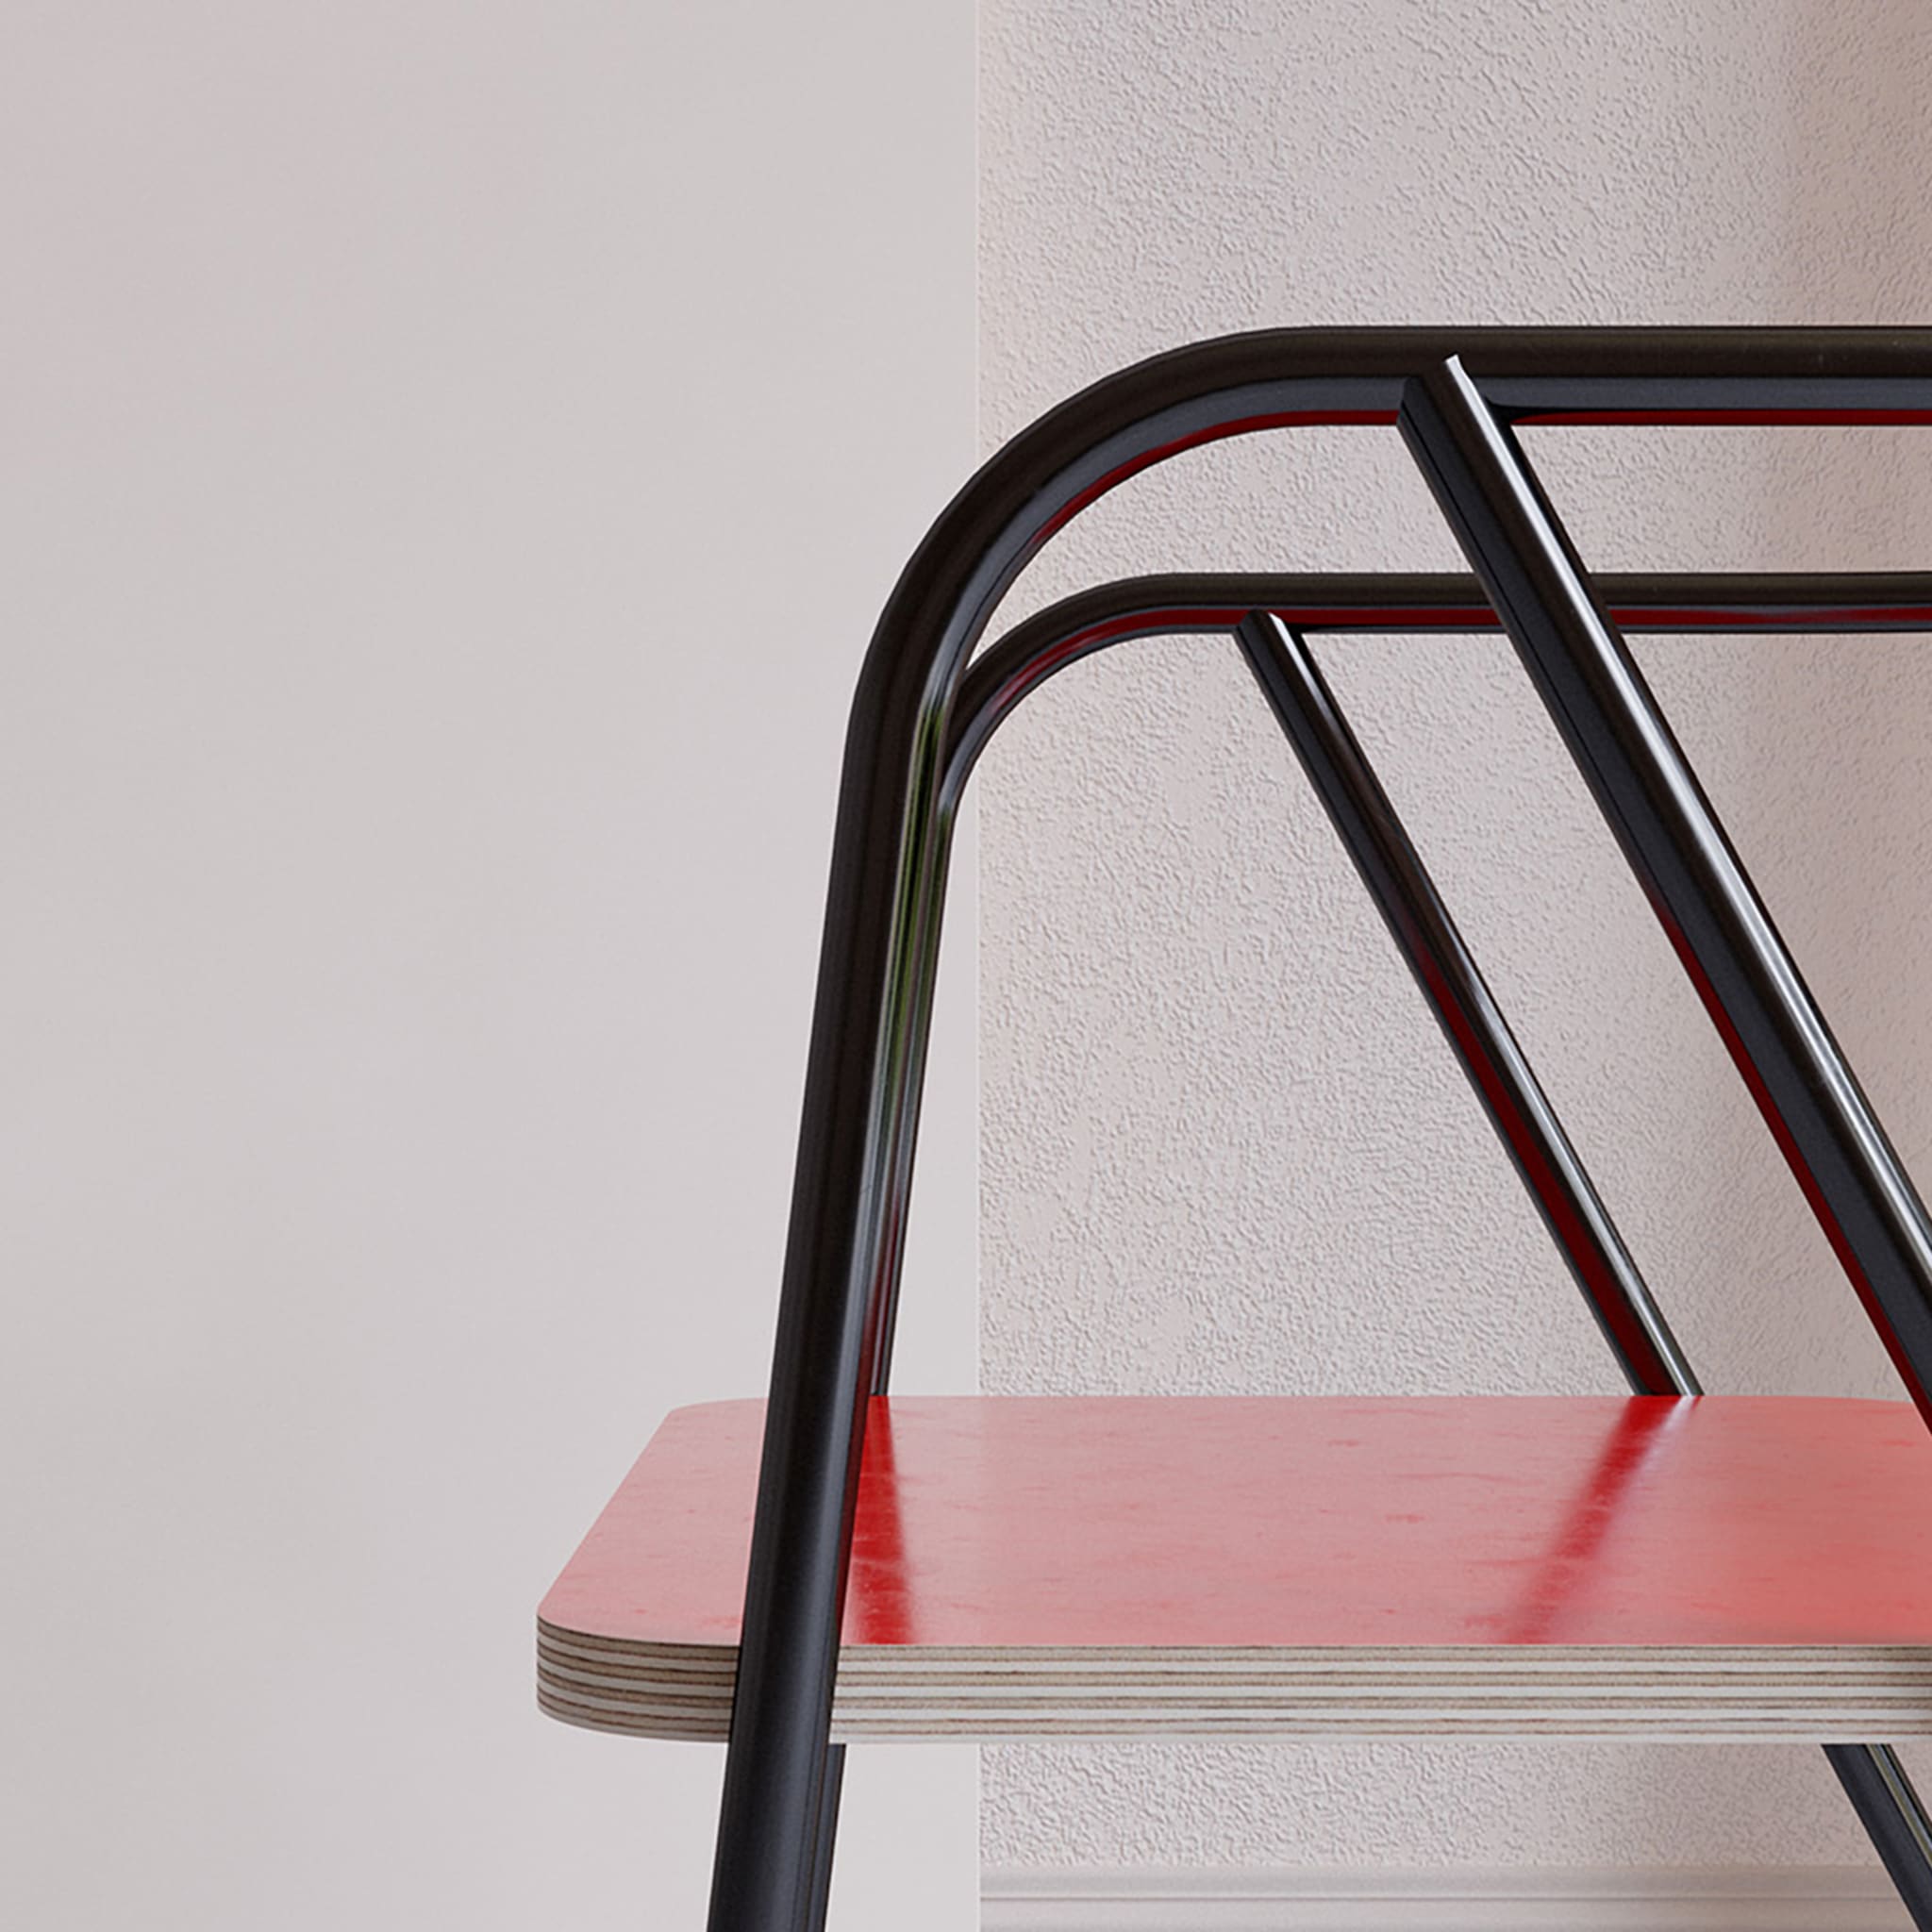 La Misciù Red/Light Wood/Red Chair - Alternative view 5